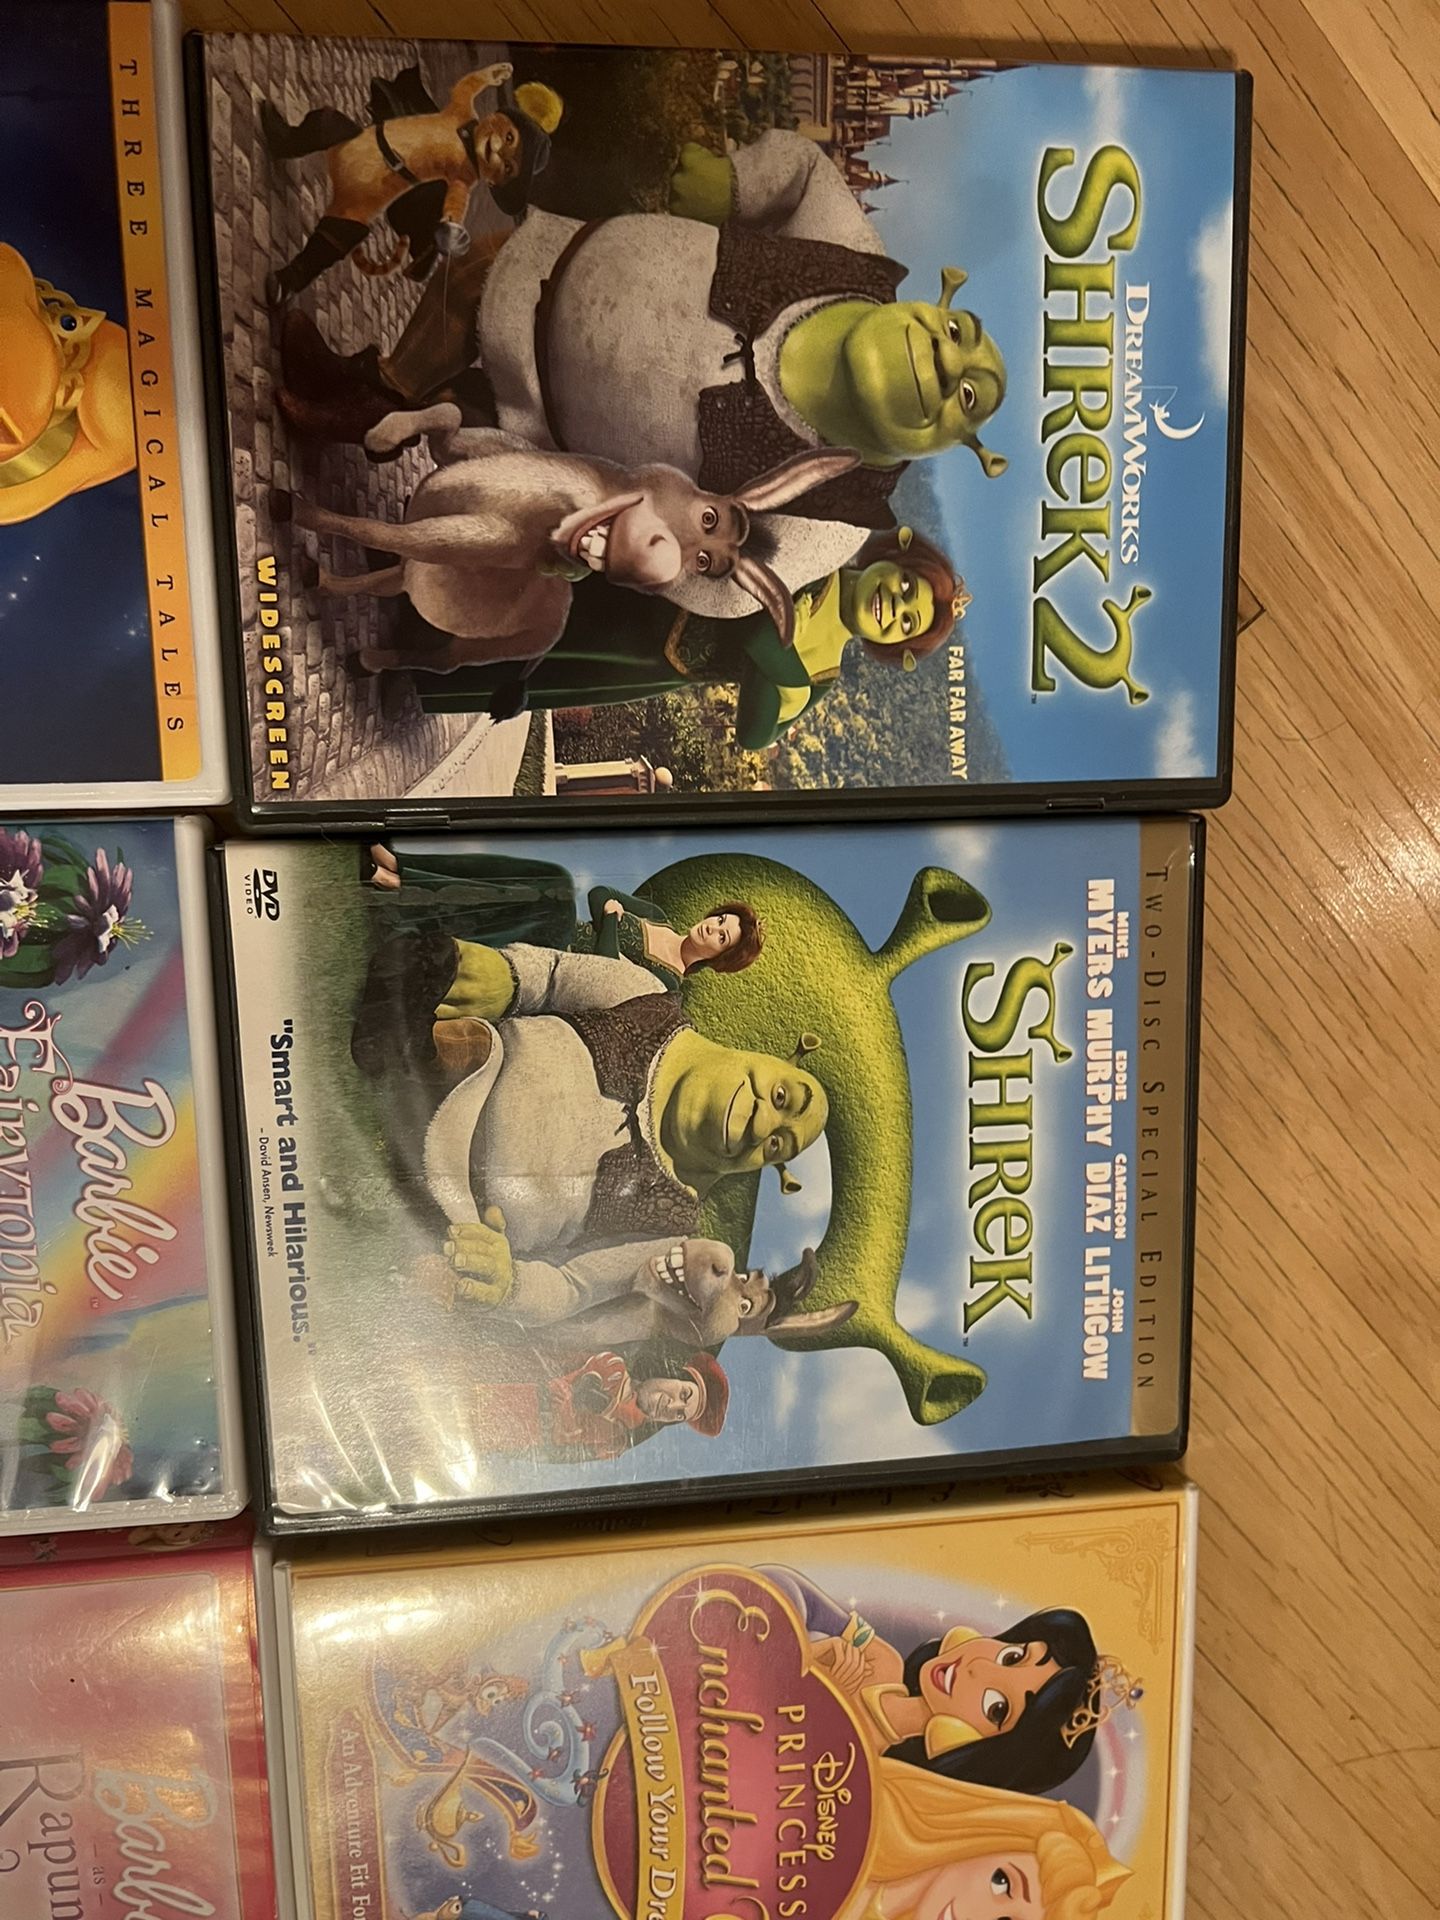 Barbie,Shrek,Disney Princess,Cinderella DVD’s